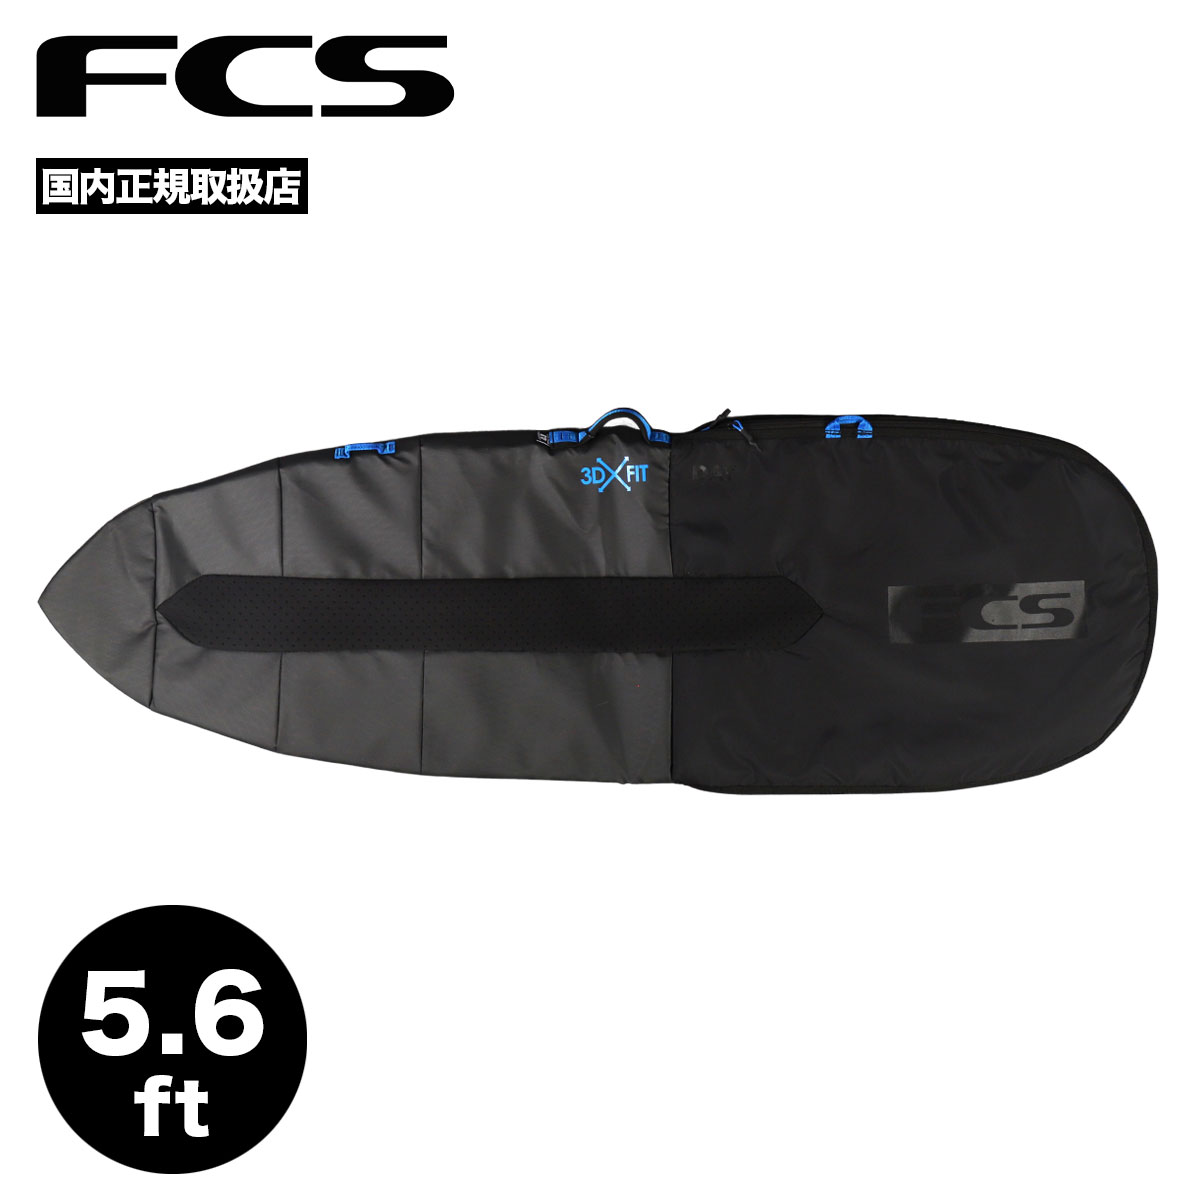 FCS エフシーエス サーフィン ハードケース 5.6 デイ ファン ボード 